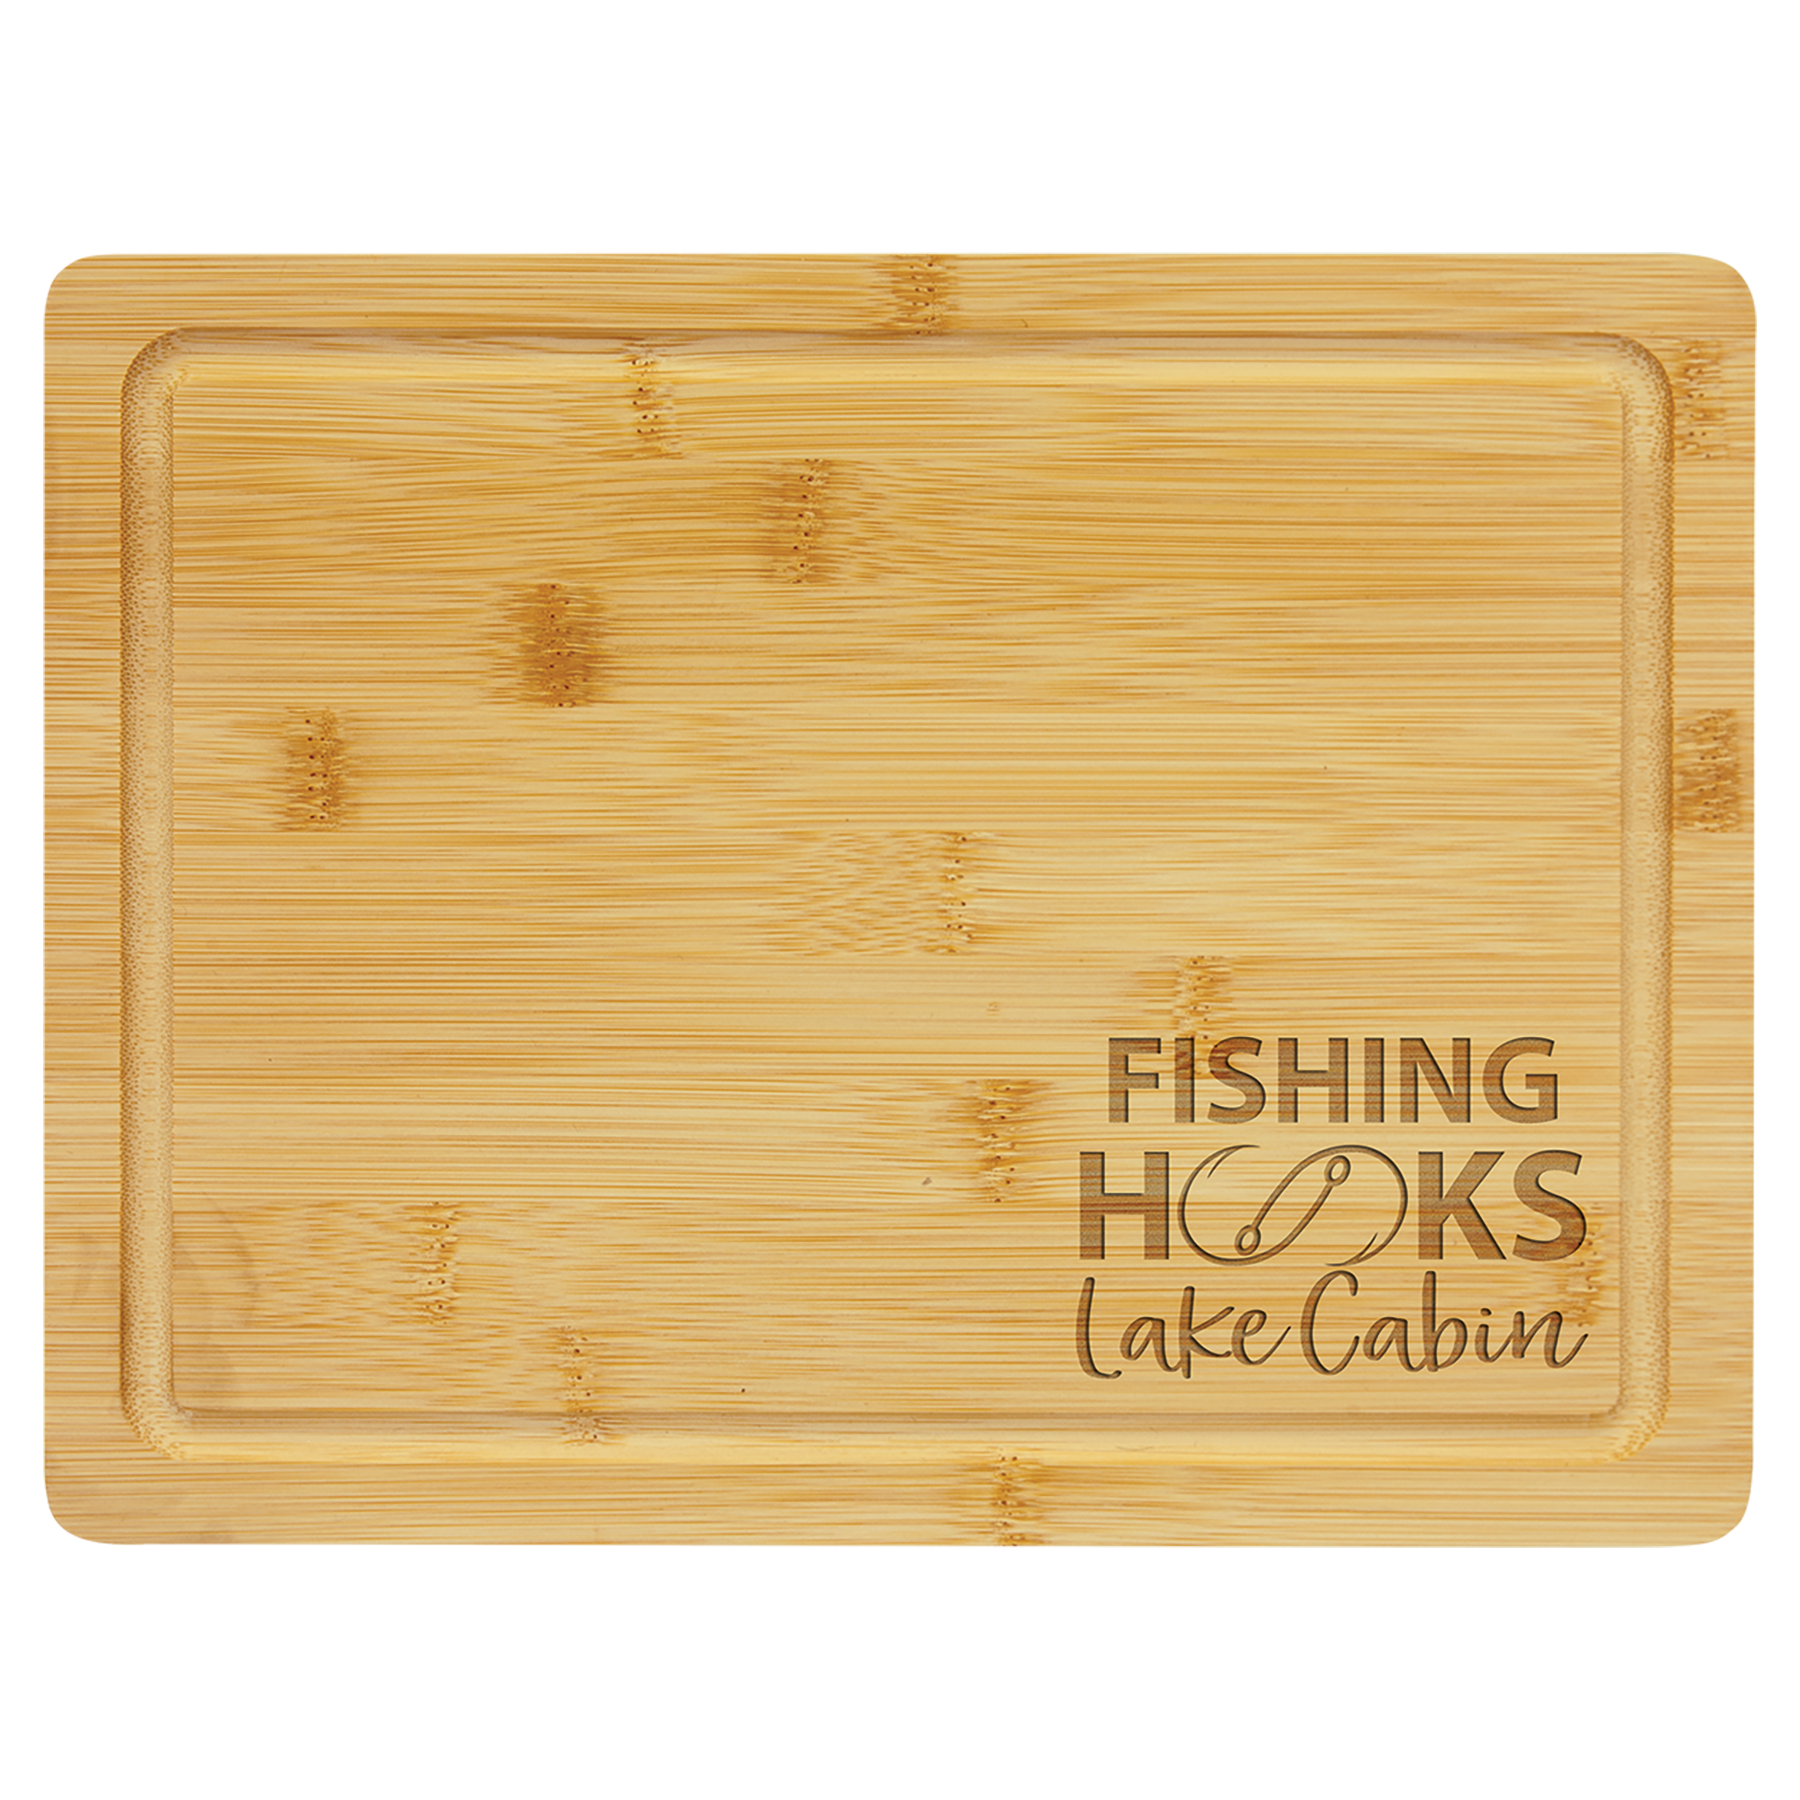 Bamboo Cutting Board w/Drip Ring, 11-1/2" x 8-3/4", Laser Engraved - Craftworks NW, LLC